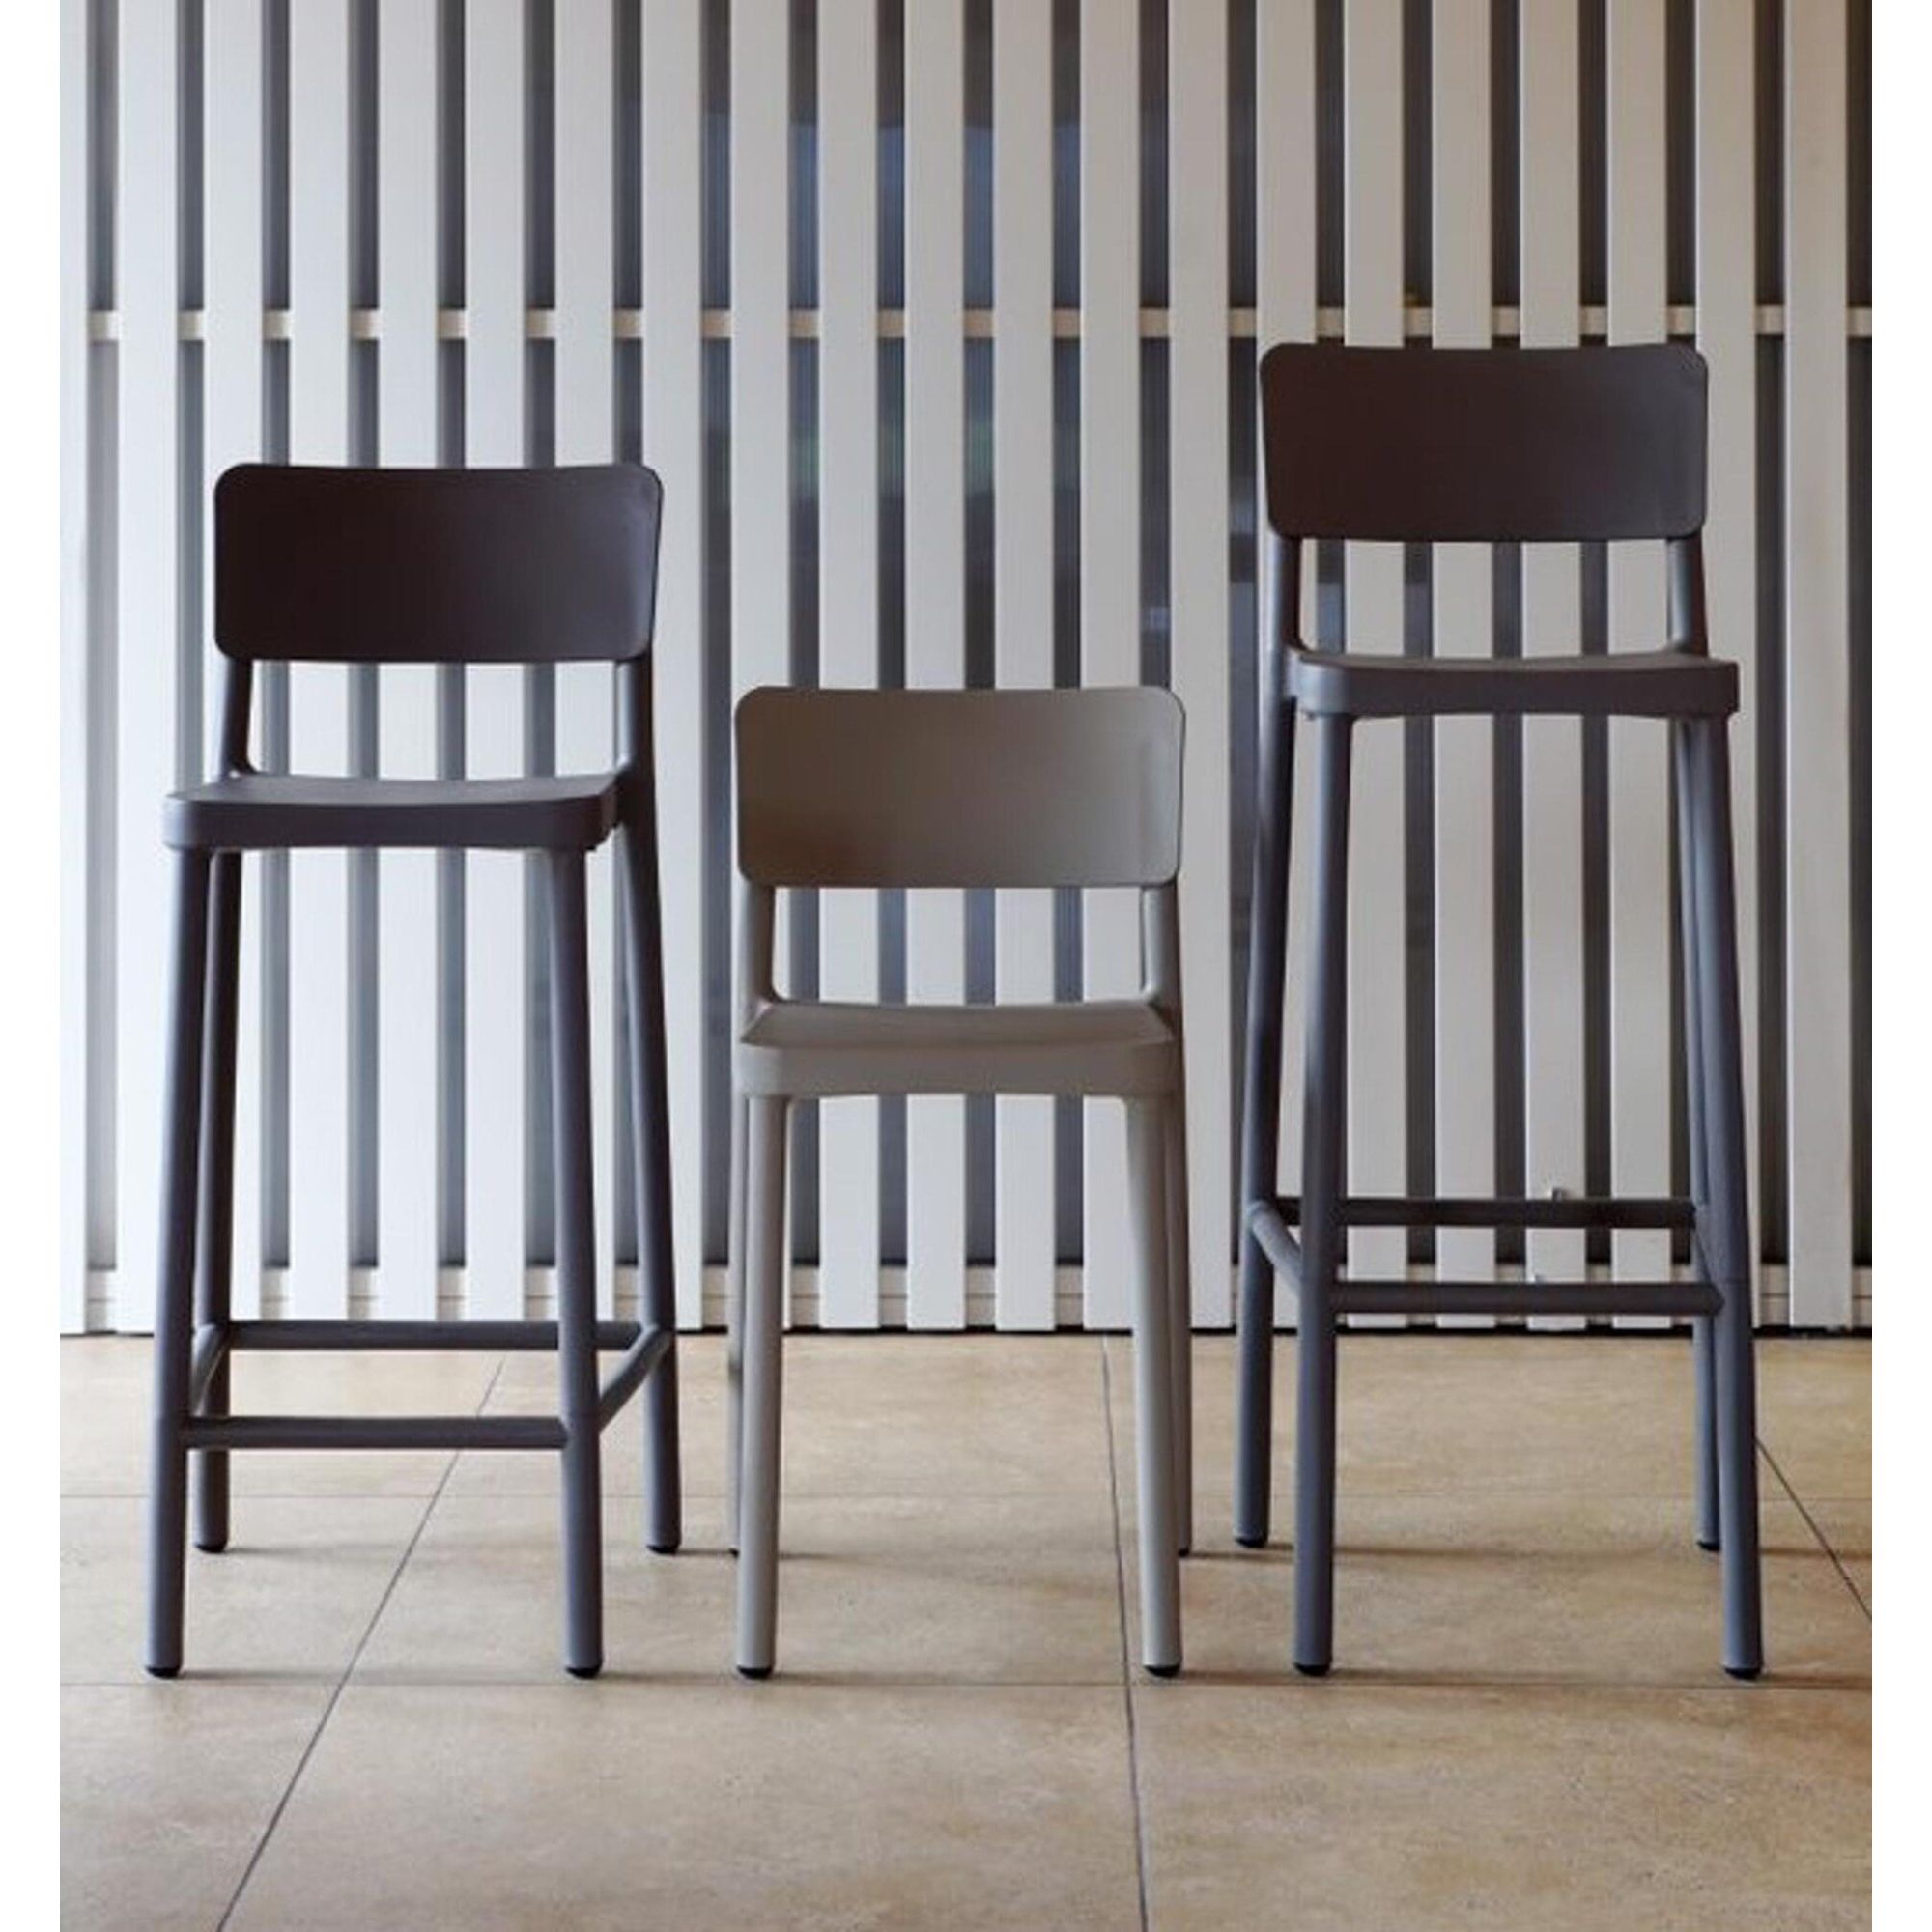 Resol lisboa high chair indoors, sand outdoors